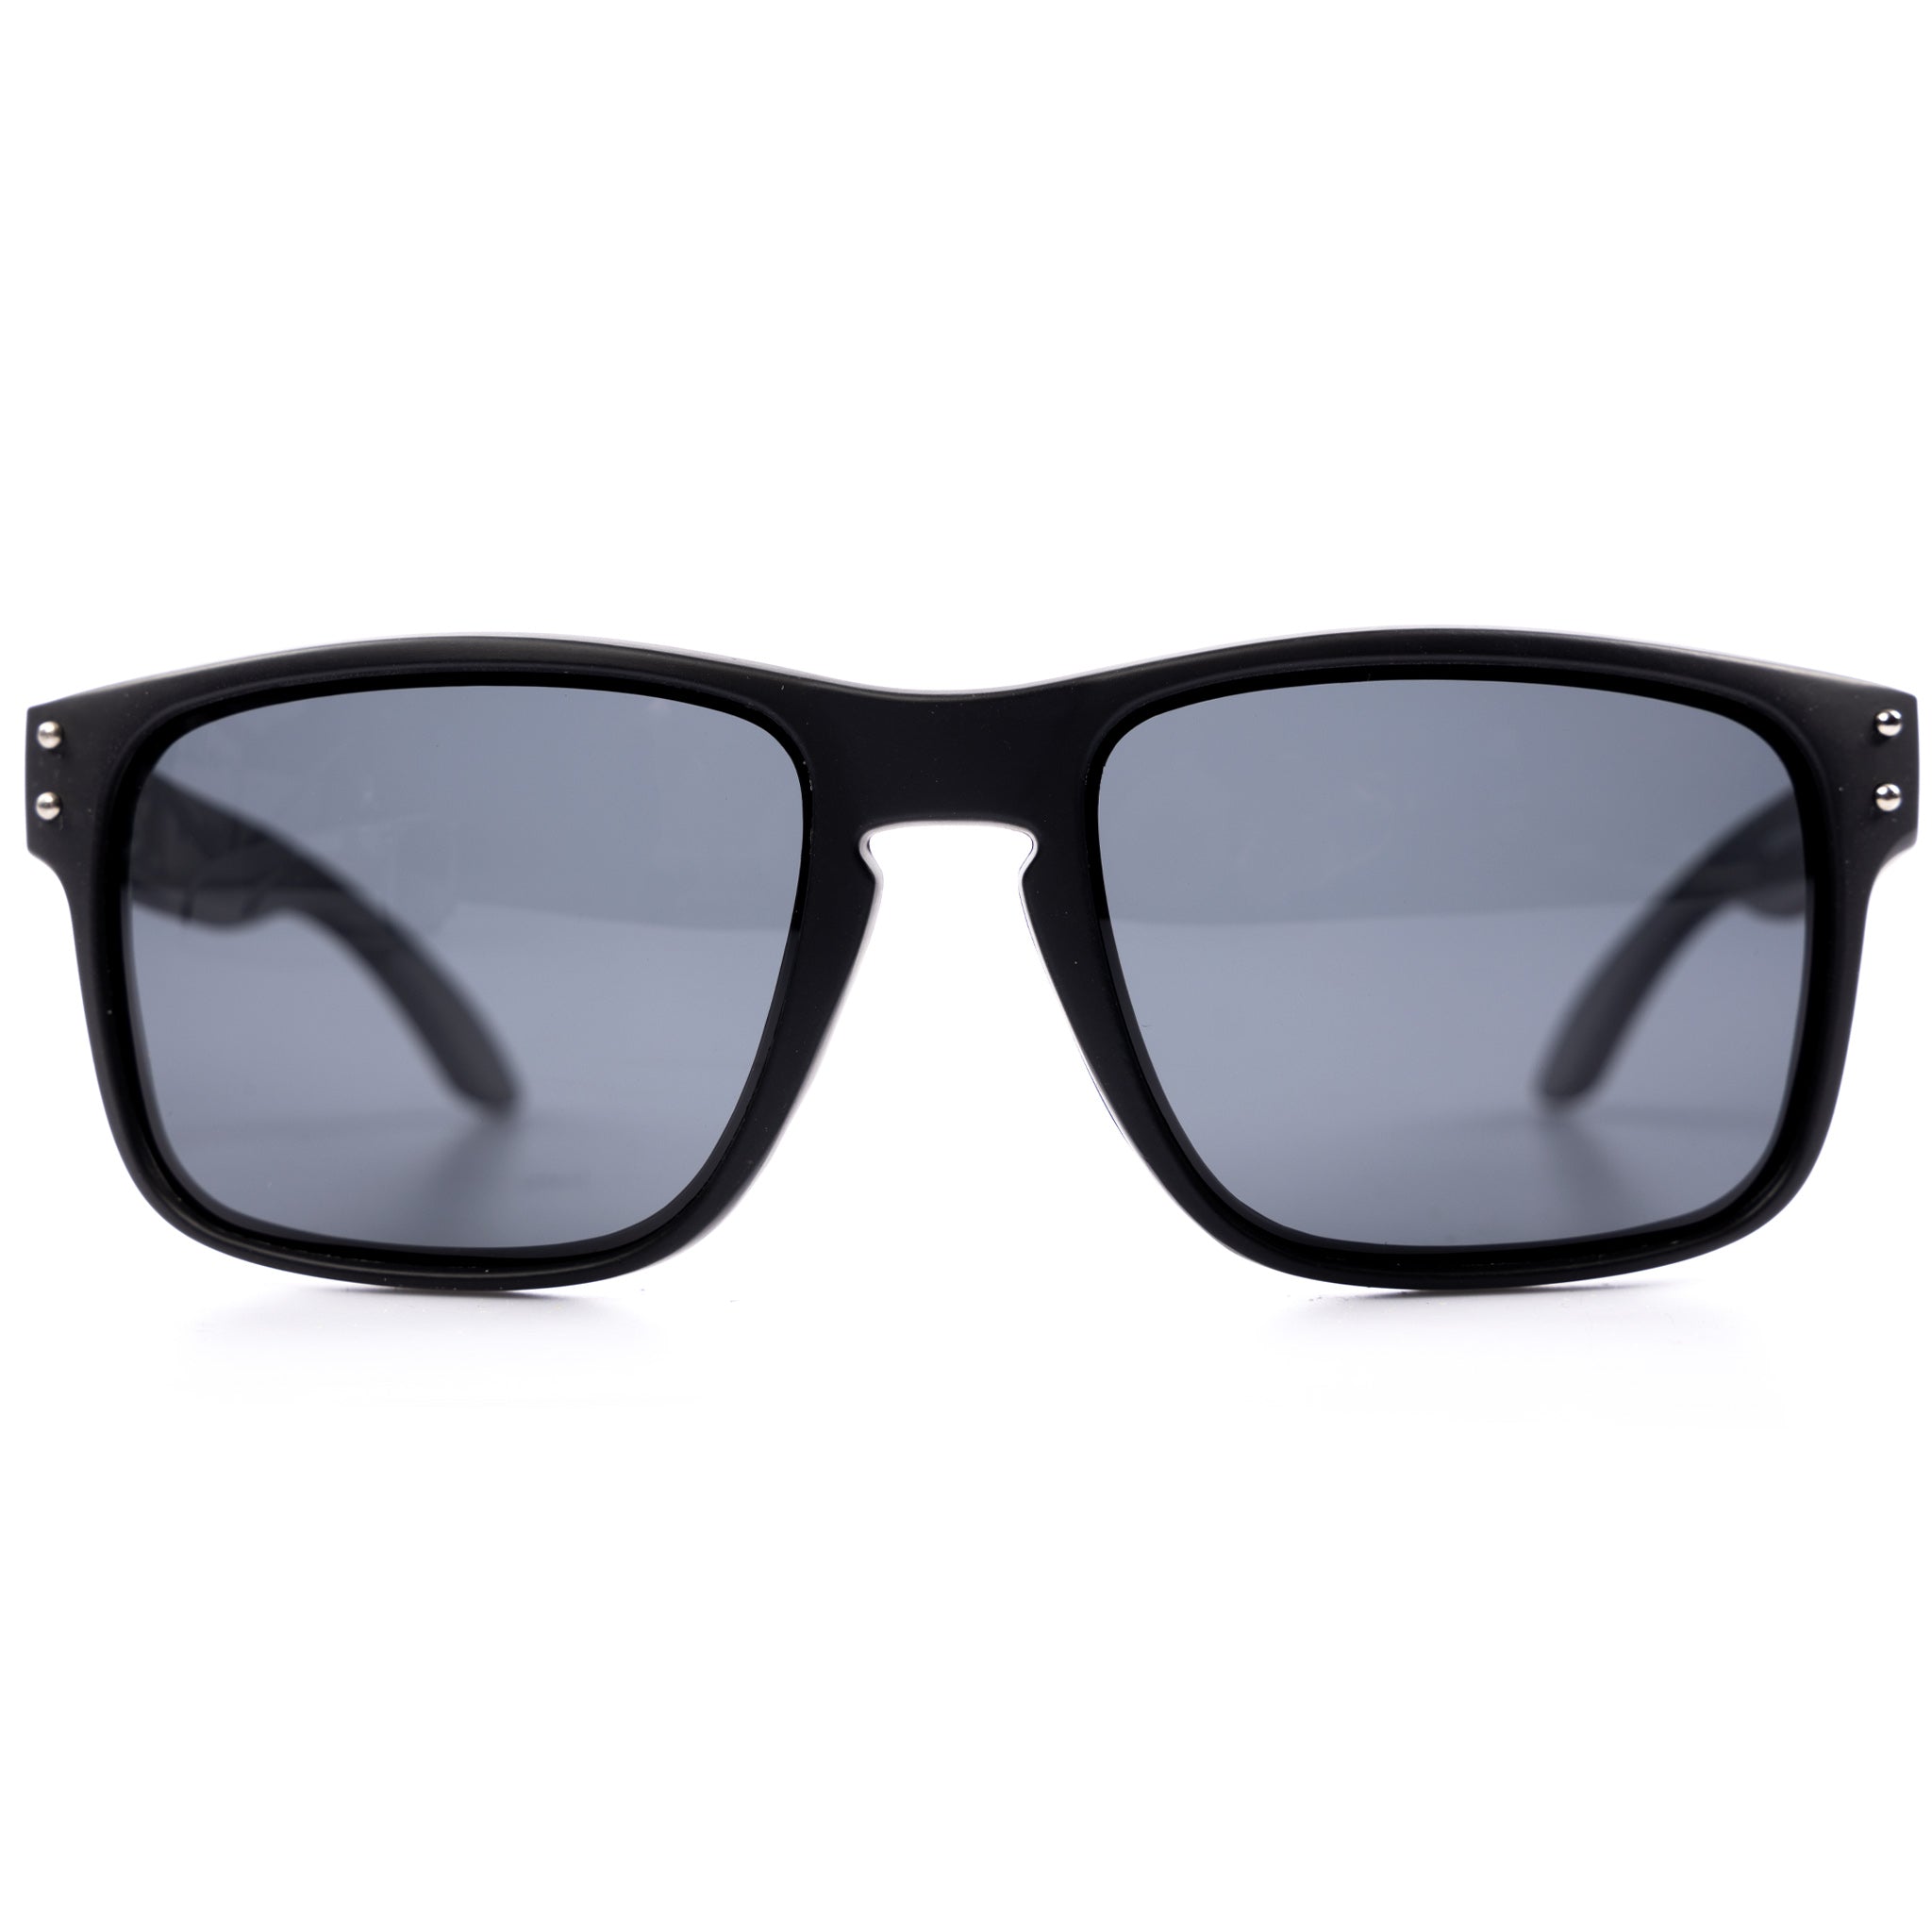 Backyard BMX Sunglasses - Black Front | Backyard UK BMX Shop Hastings